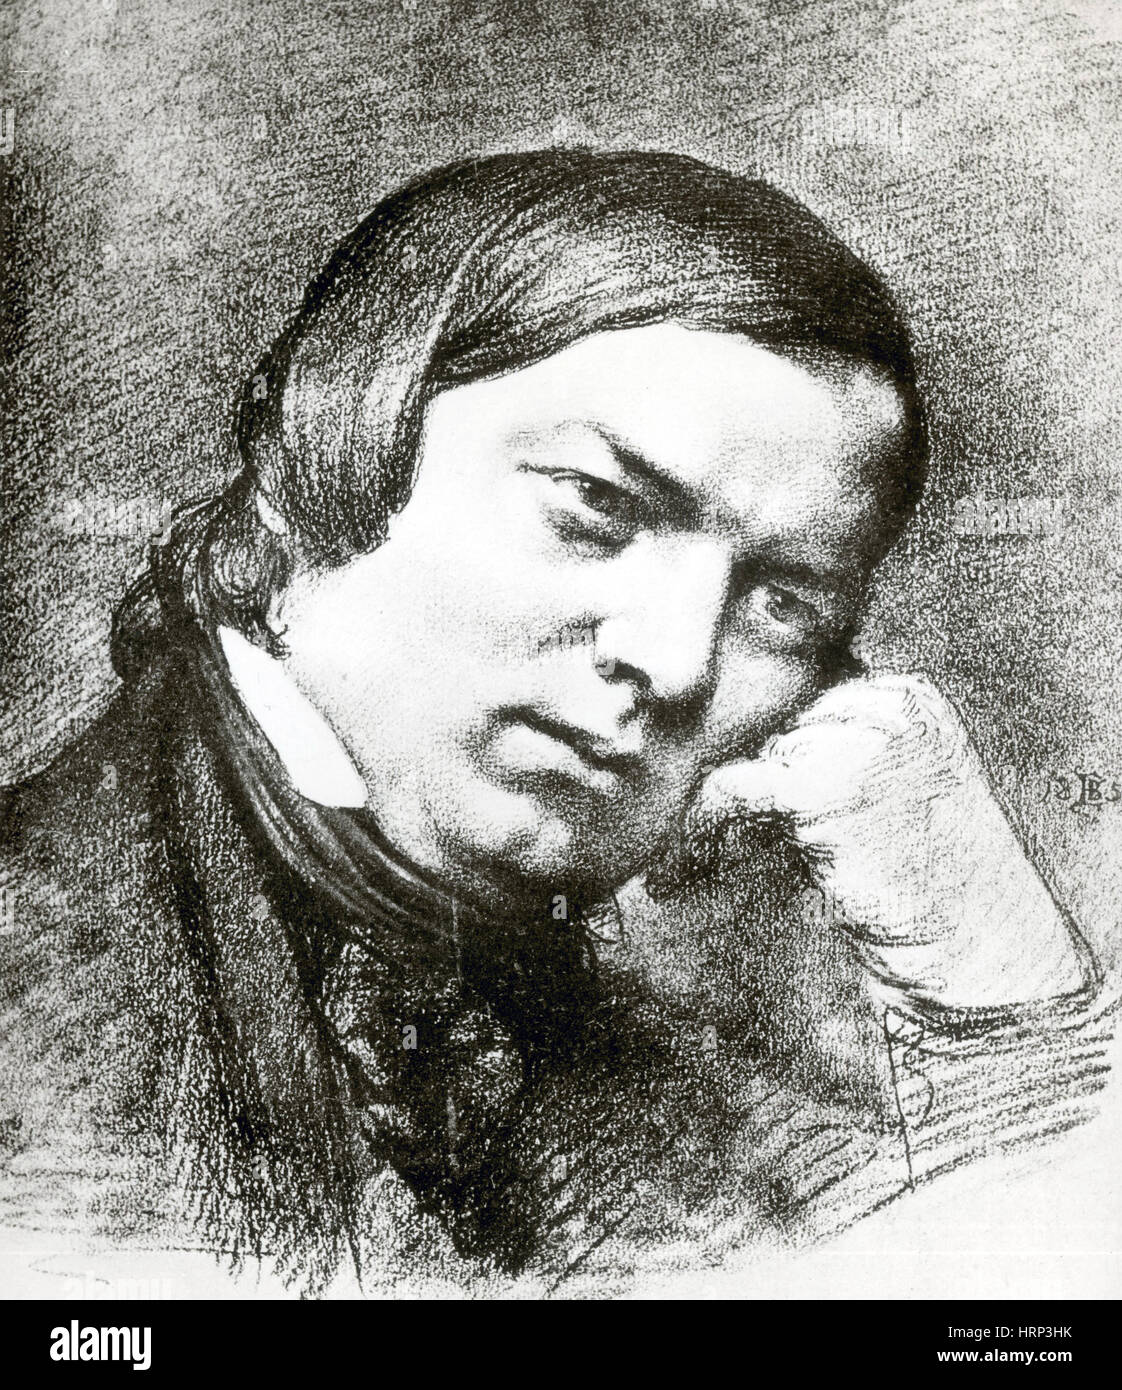 Robert Schumann, compositeur allemand Banque D'Images